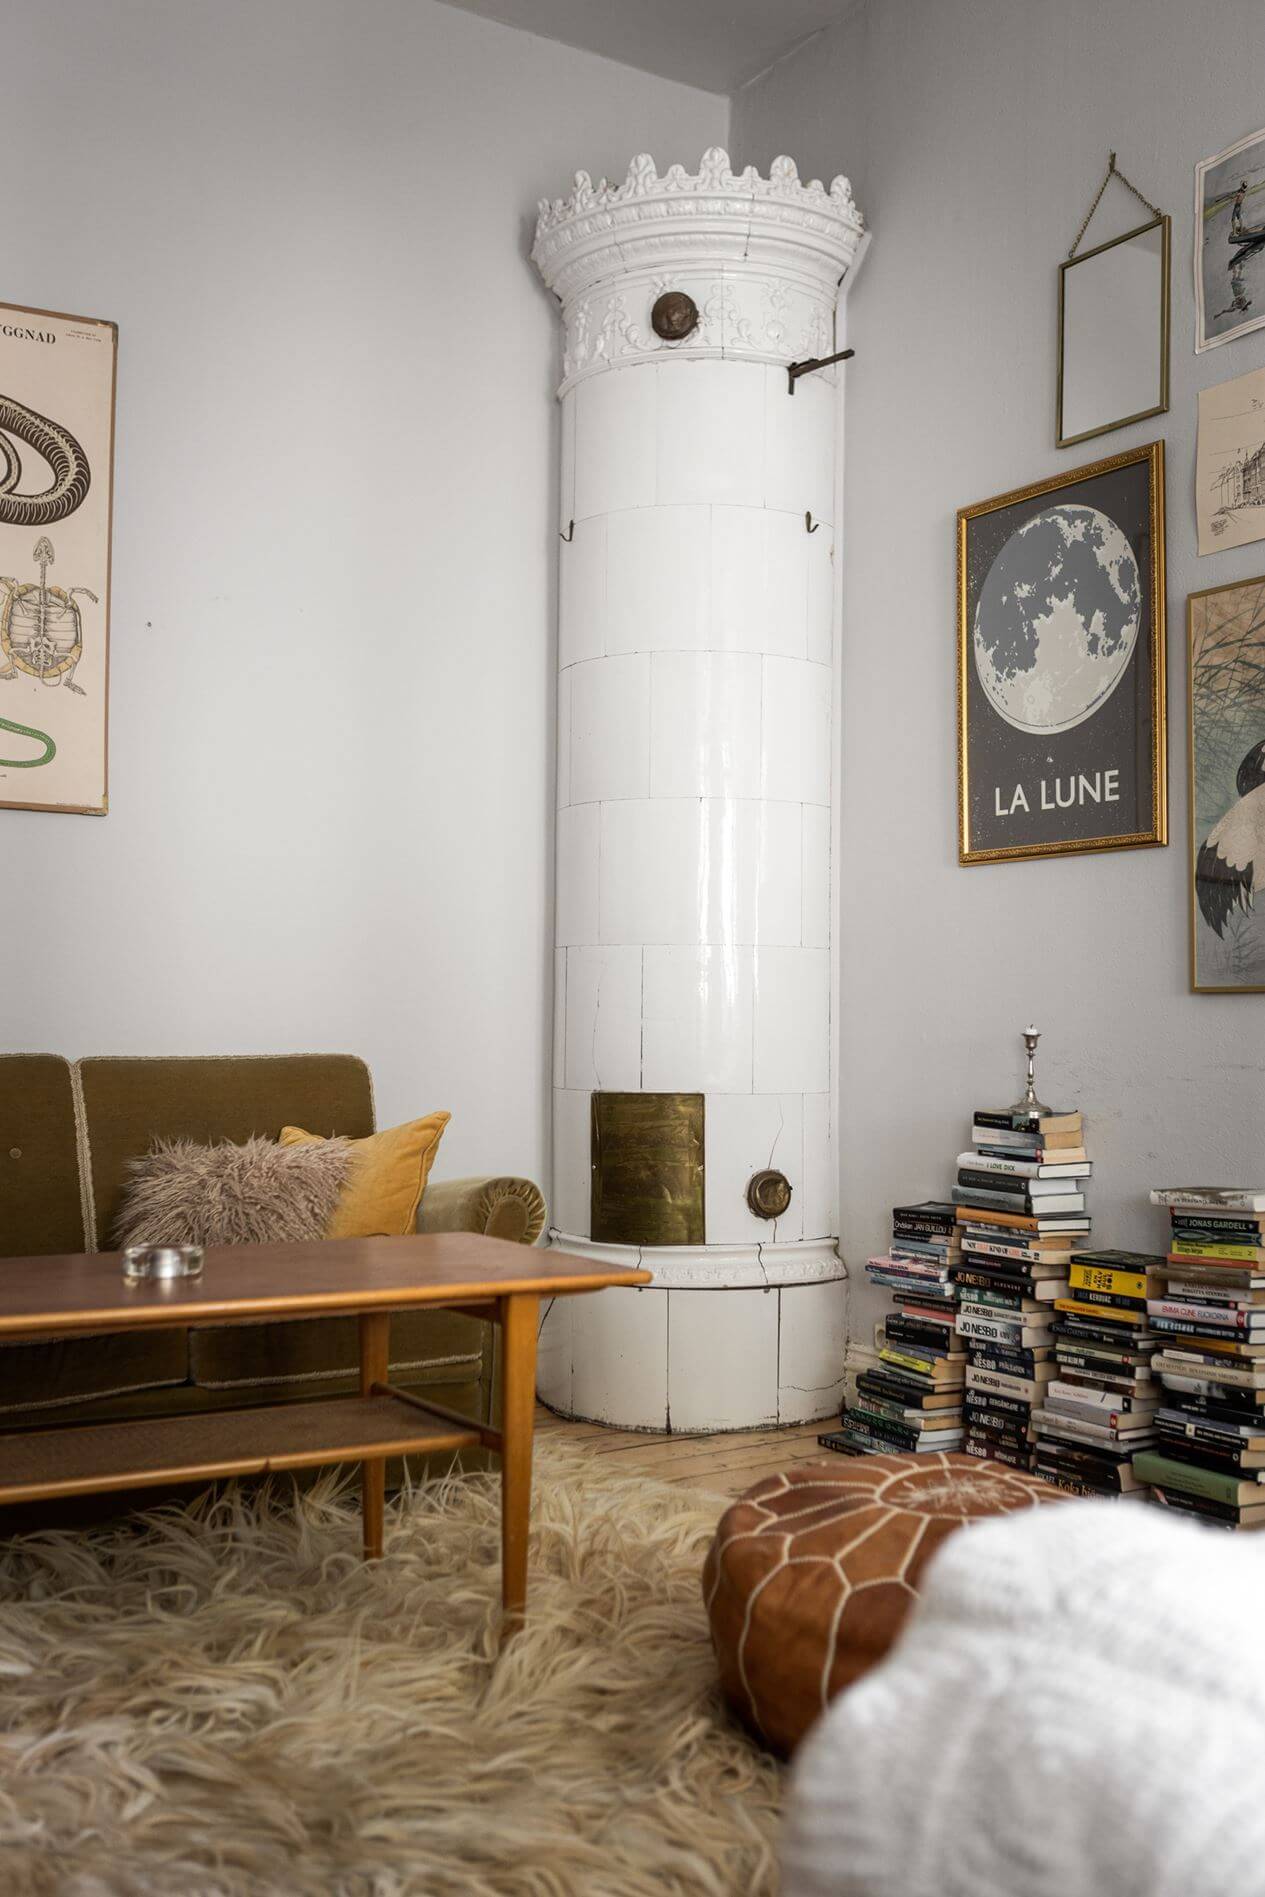 A Studio Apartment with Vintage Decor